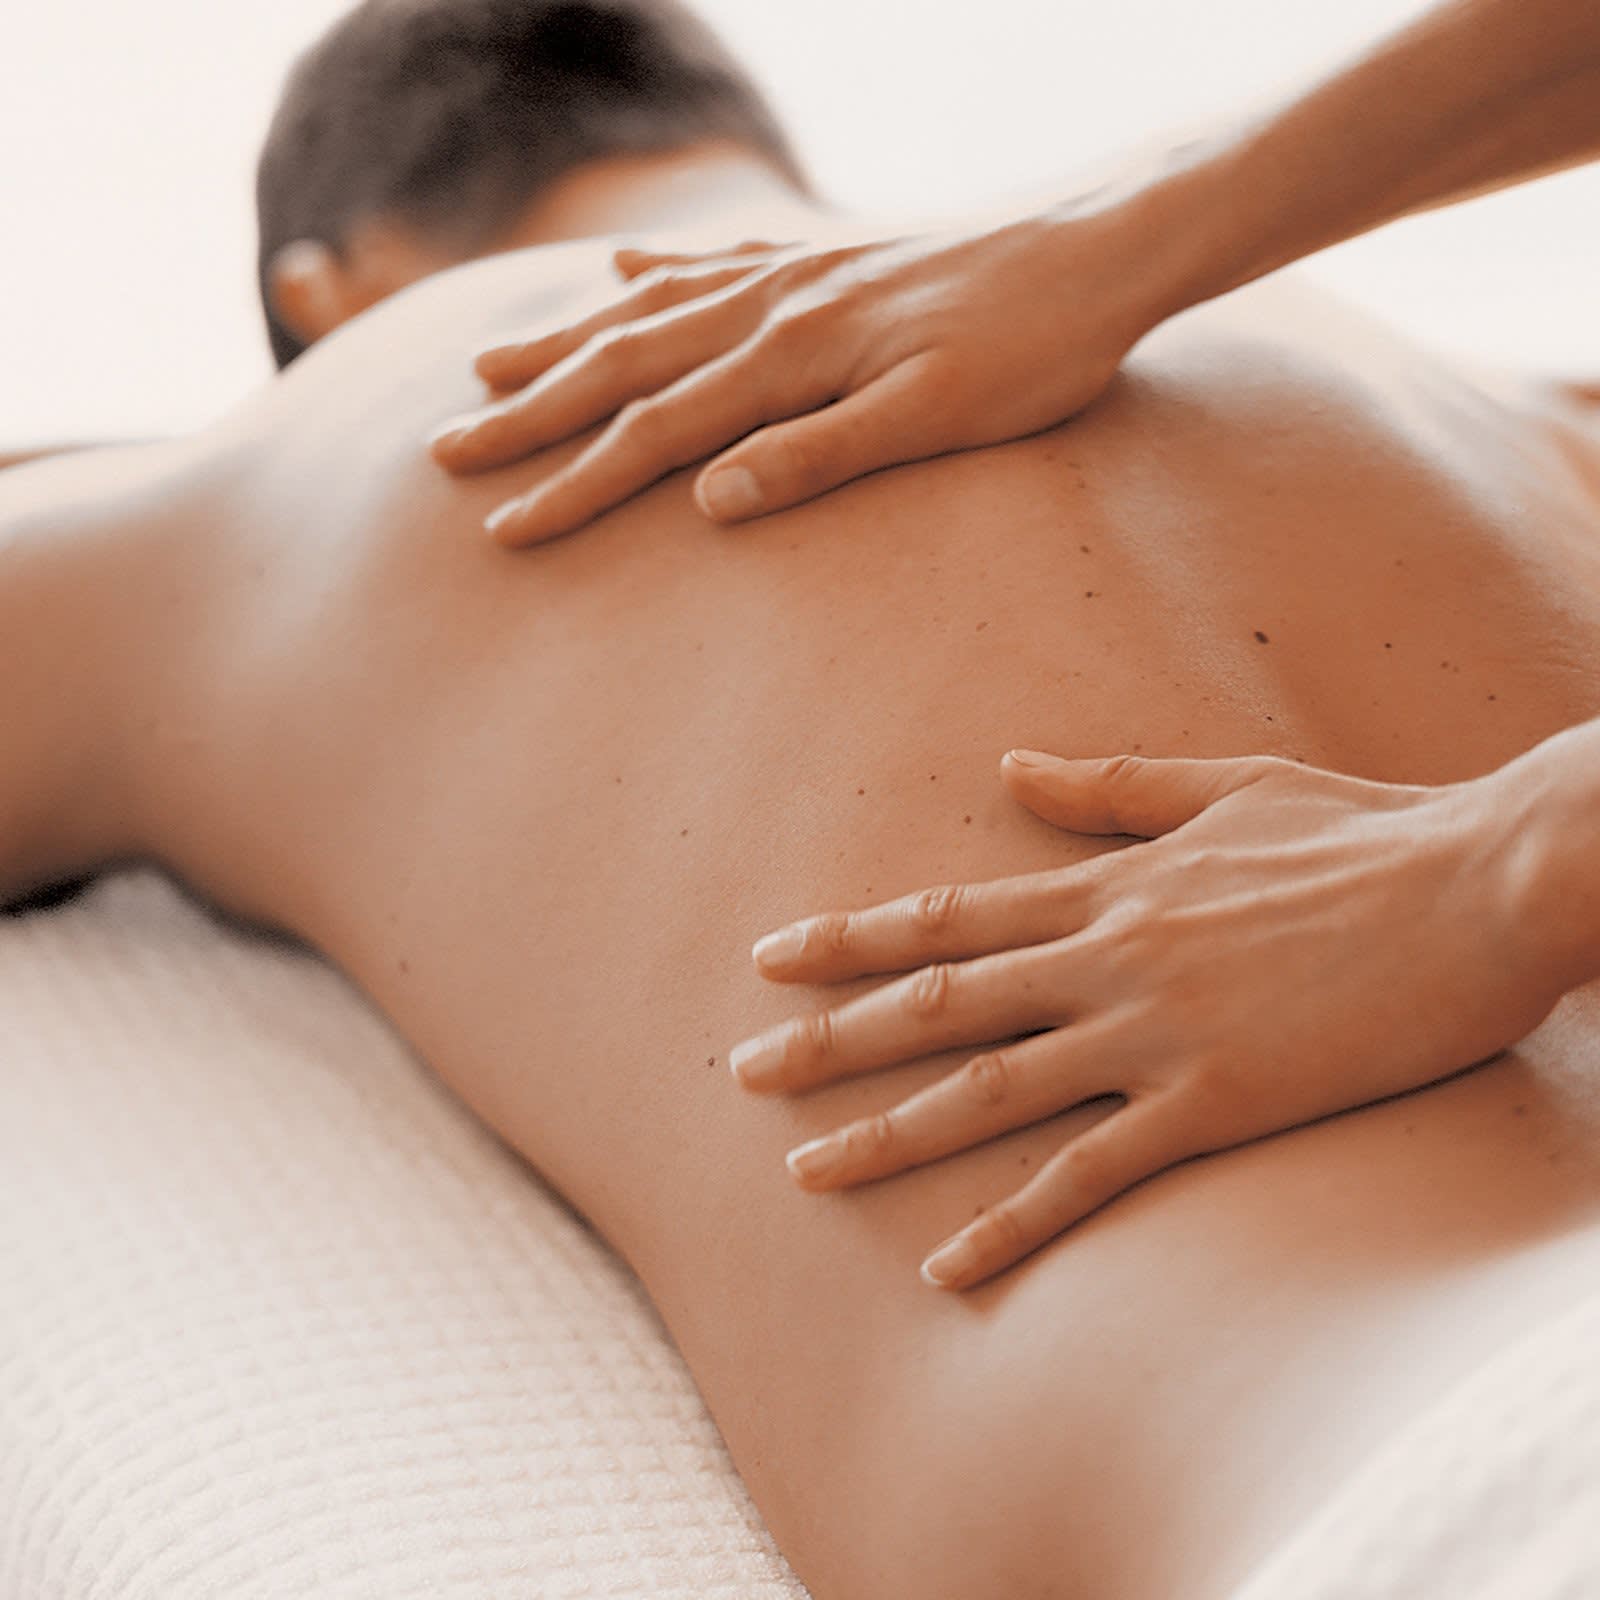 Images Lee Brunton Sports Massage Therapist